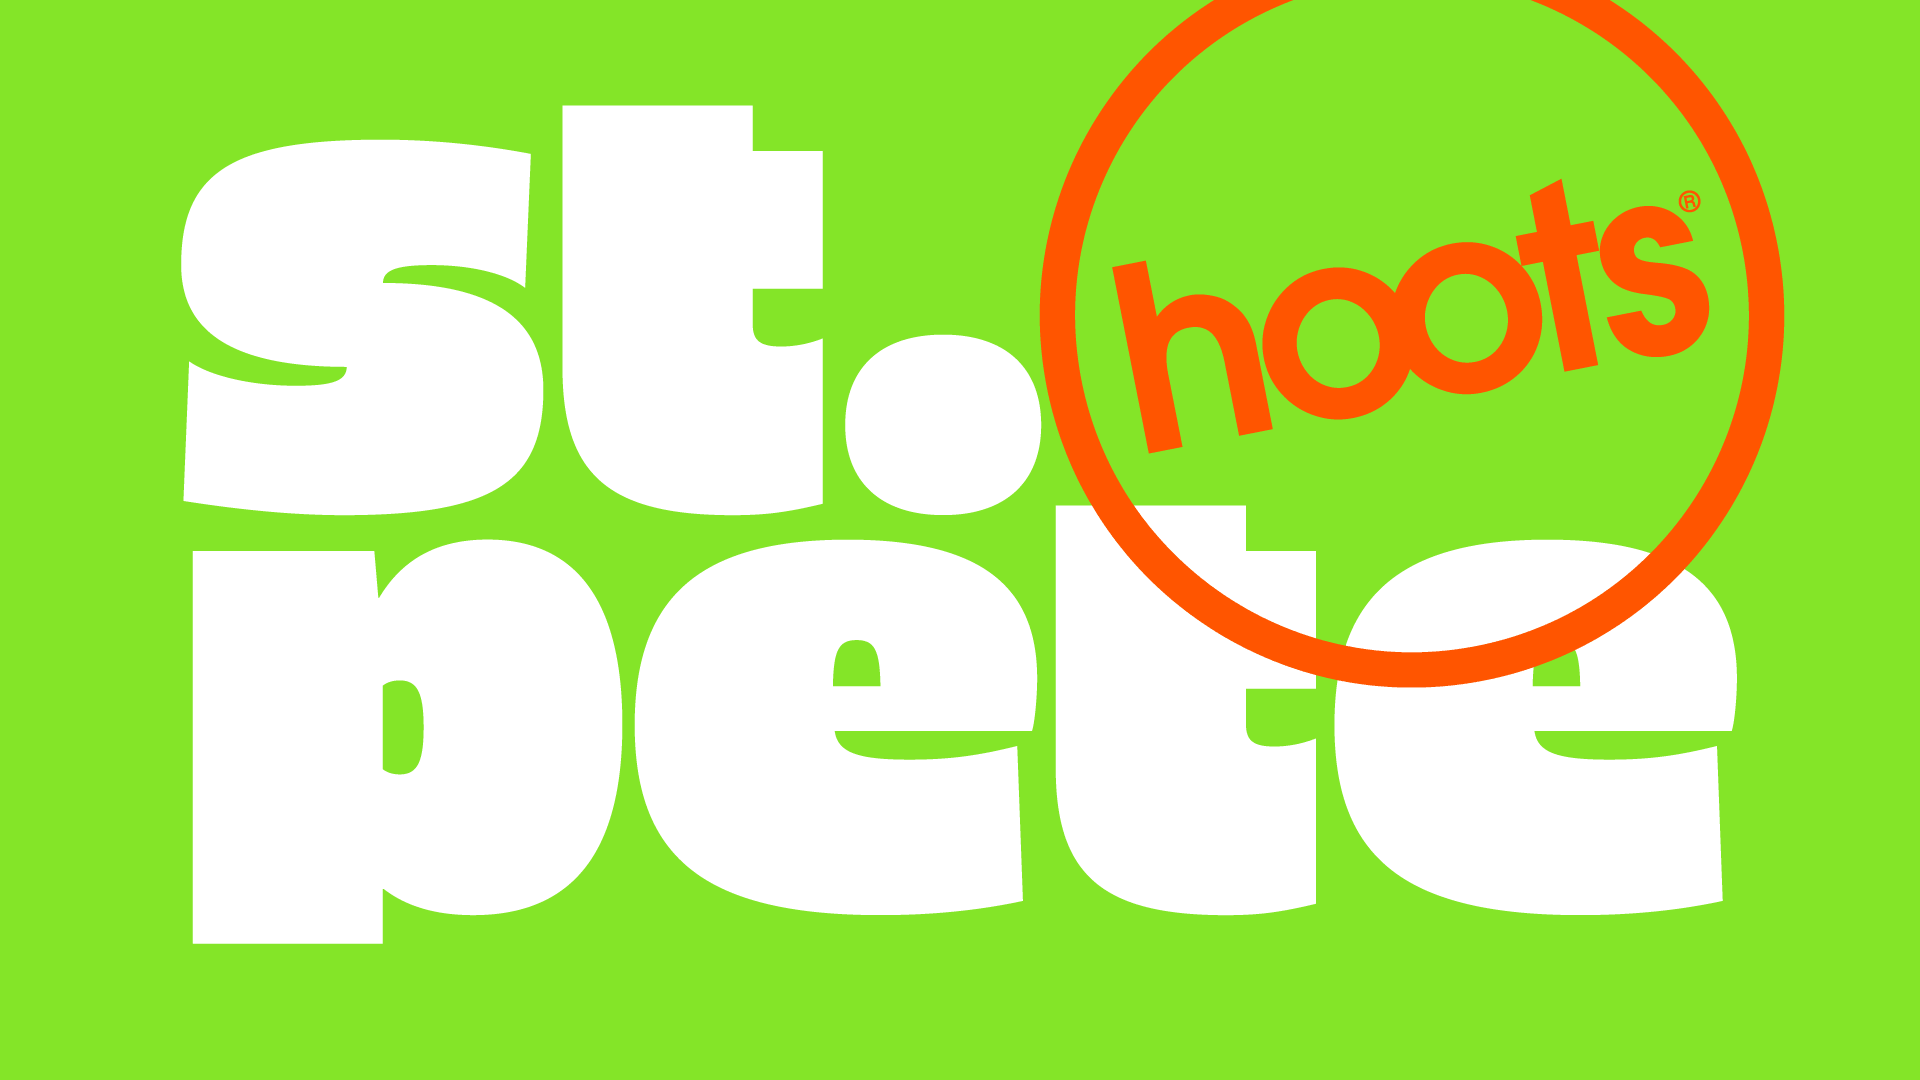 Hoots St. Pete - Now Open in St. Petersburg, Florida